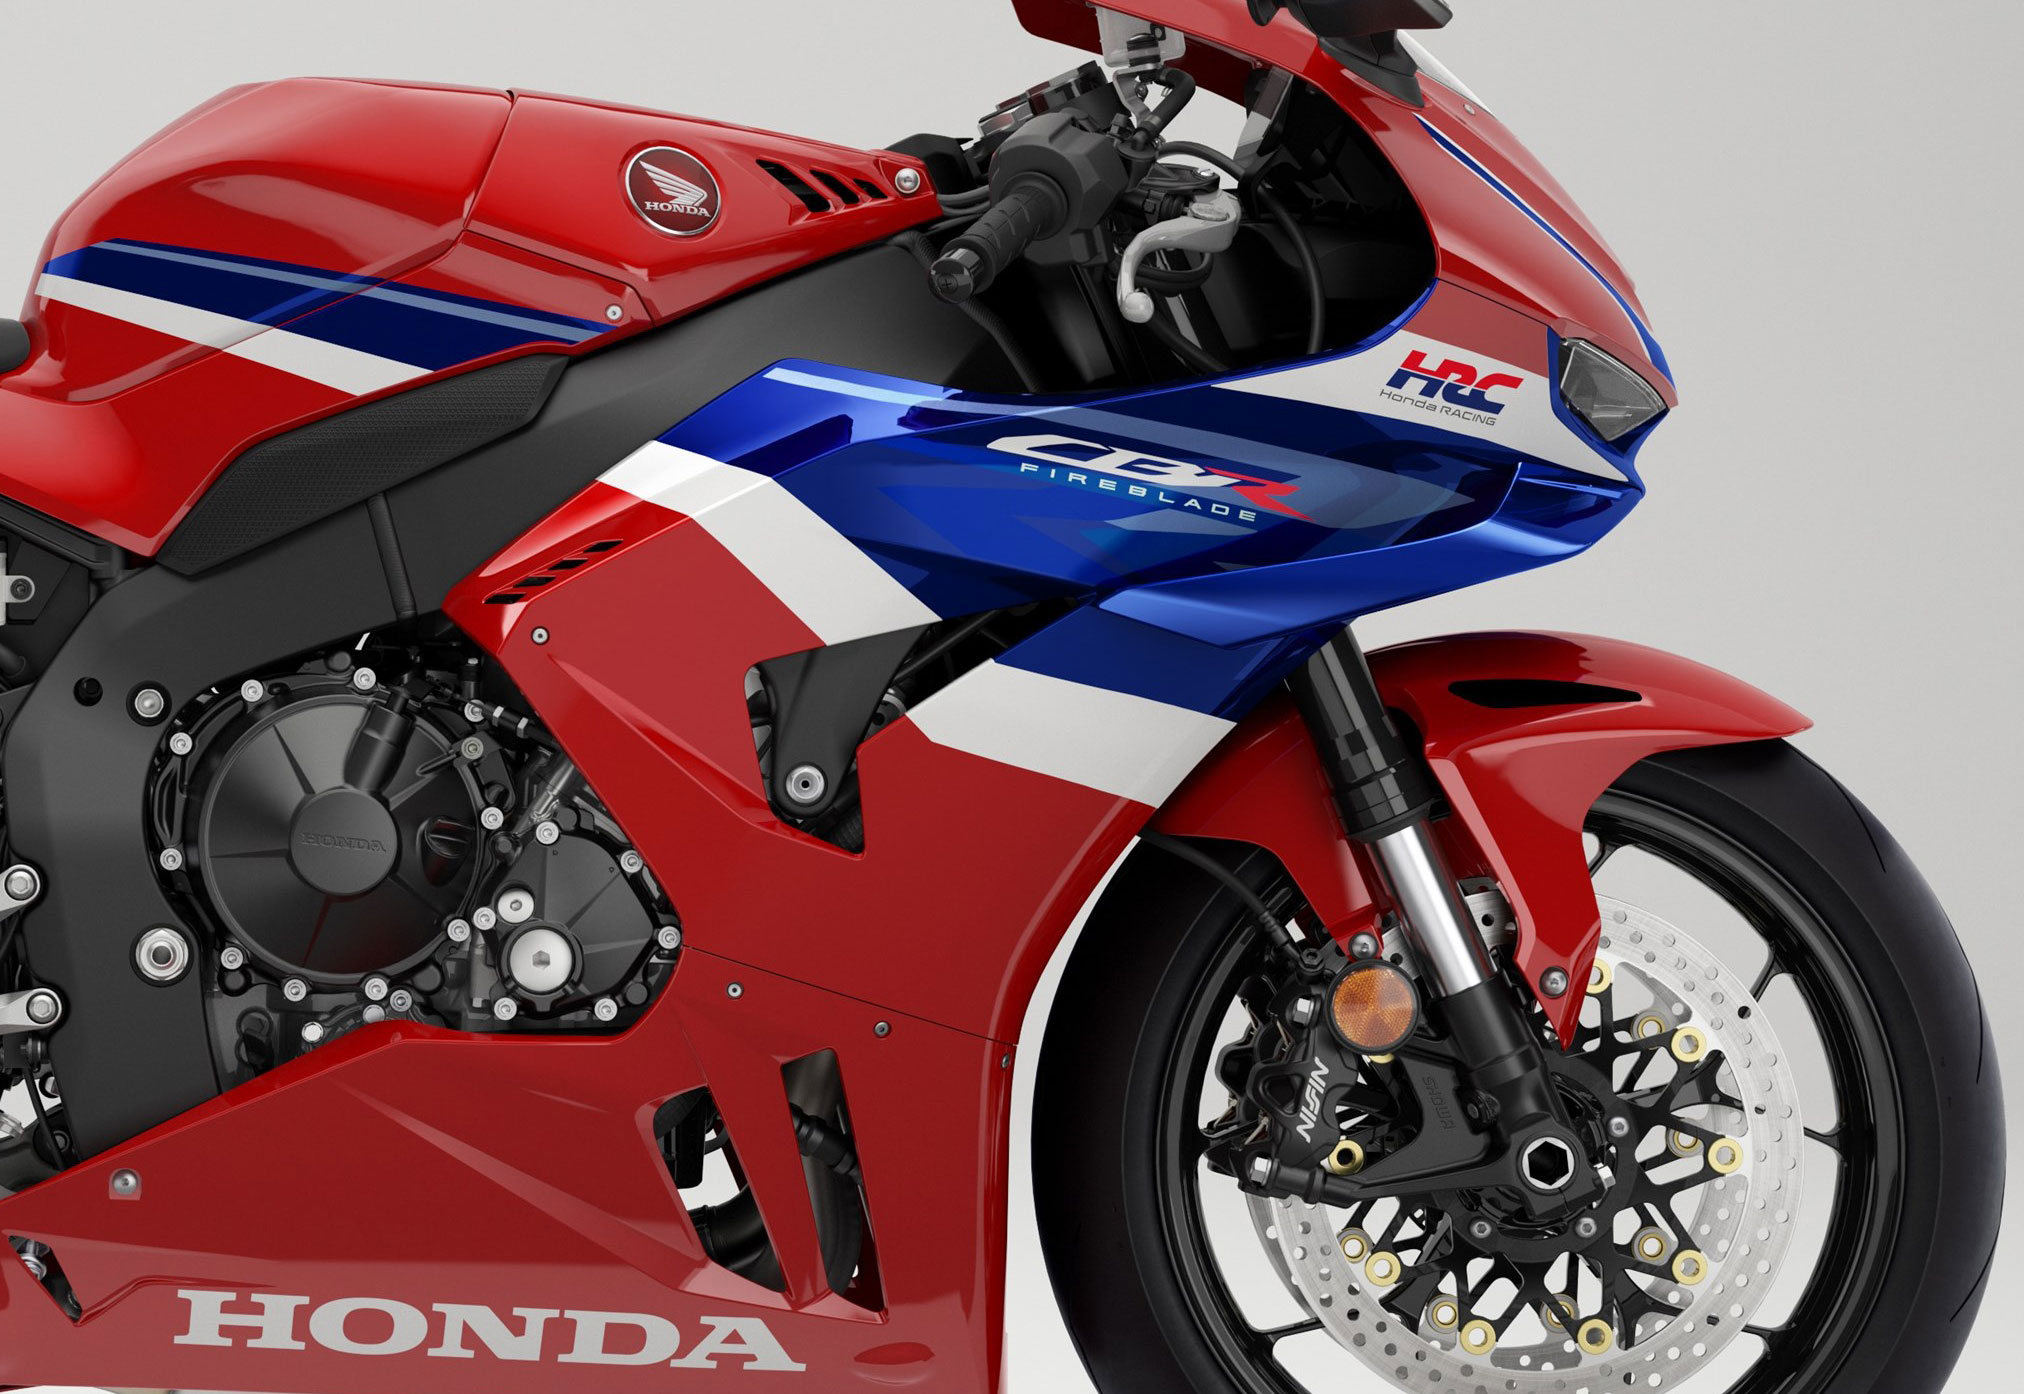 Honda Light Weight Super Sports Concept Shows Off a 14,000 RPM Redline